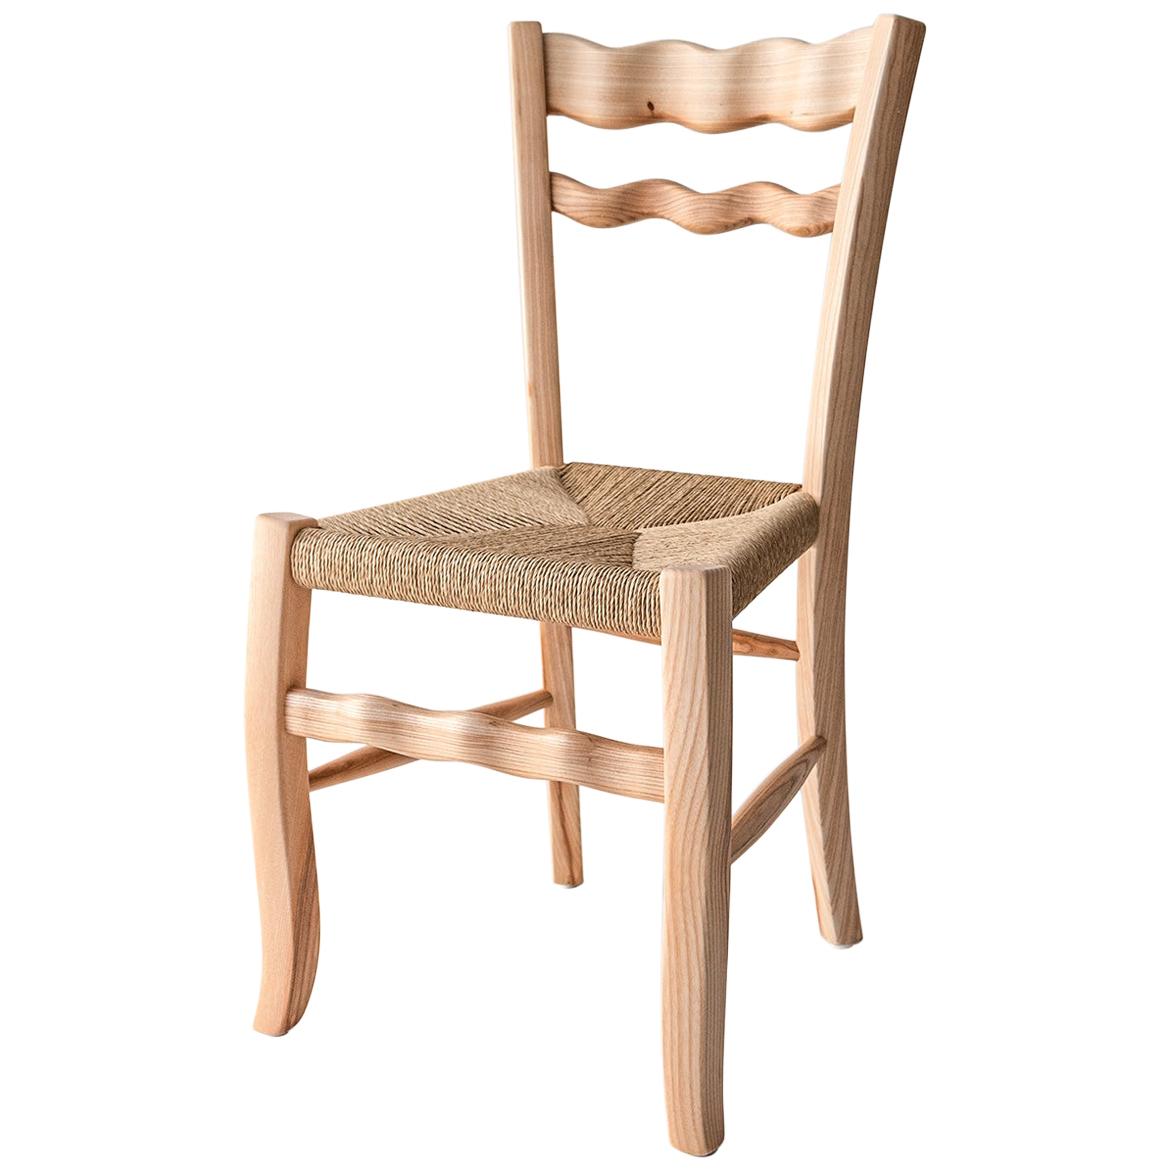 Italian Ashwood Chair "A signurina - Nuda 02" by MYOP For Sale